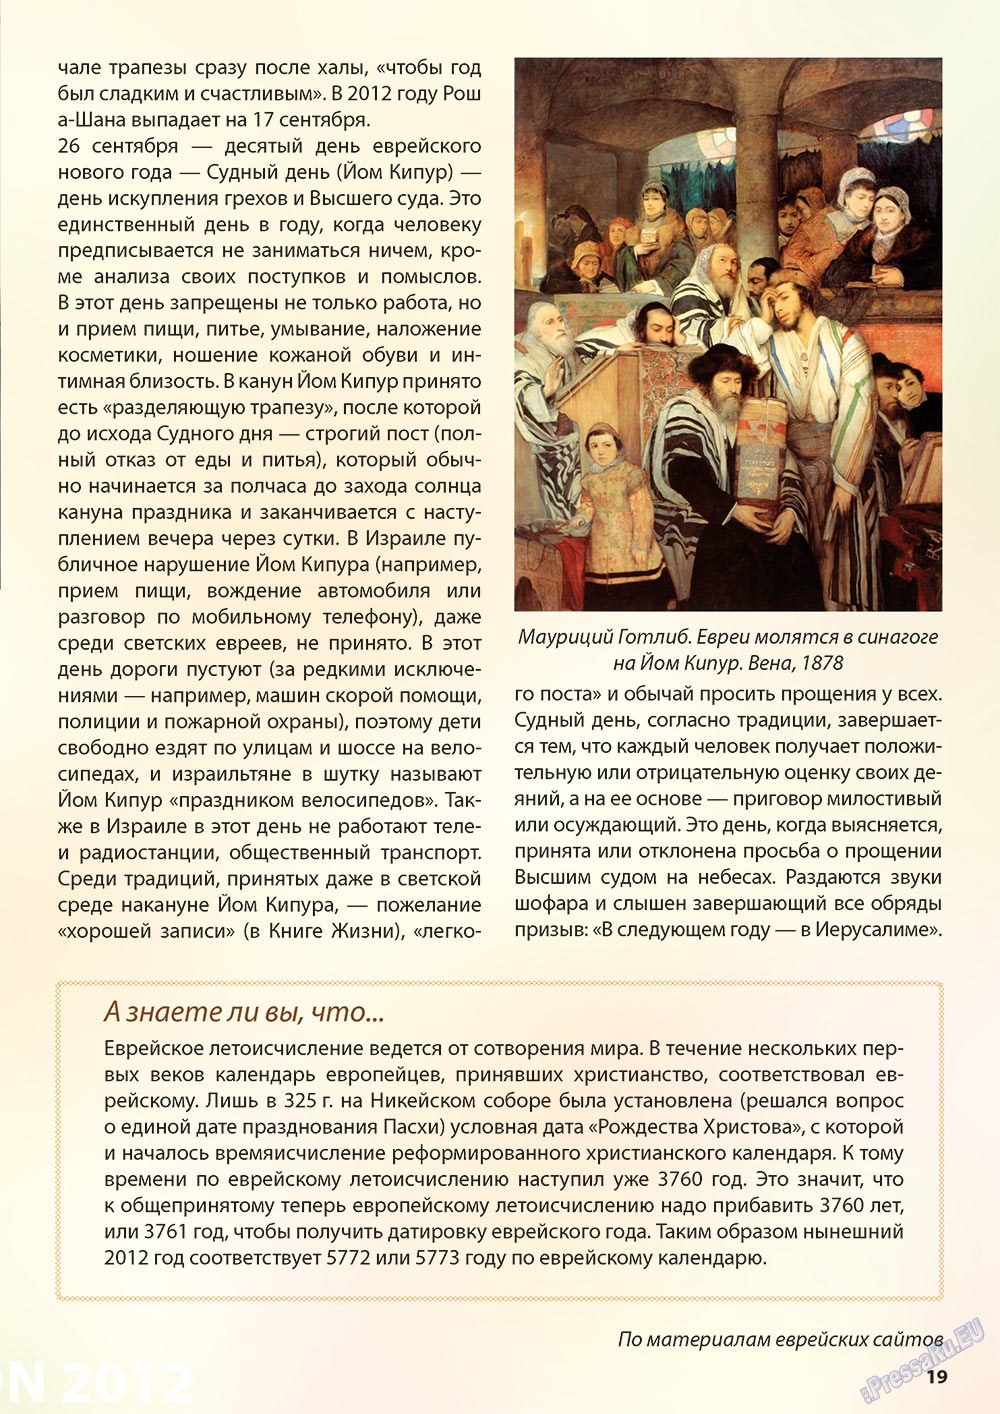 Wadim, журнал. 2012 №9 стр.19